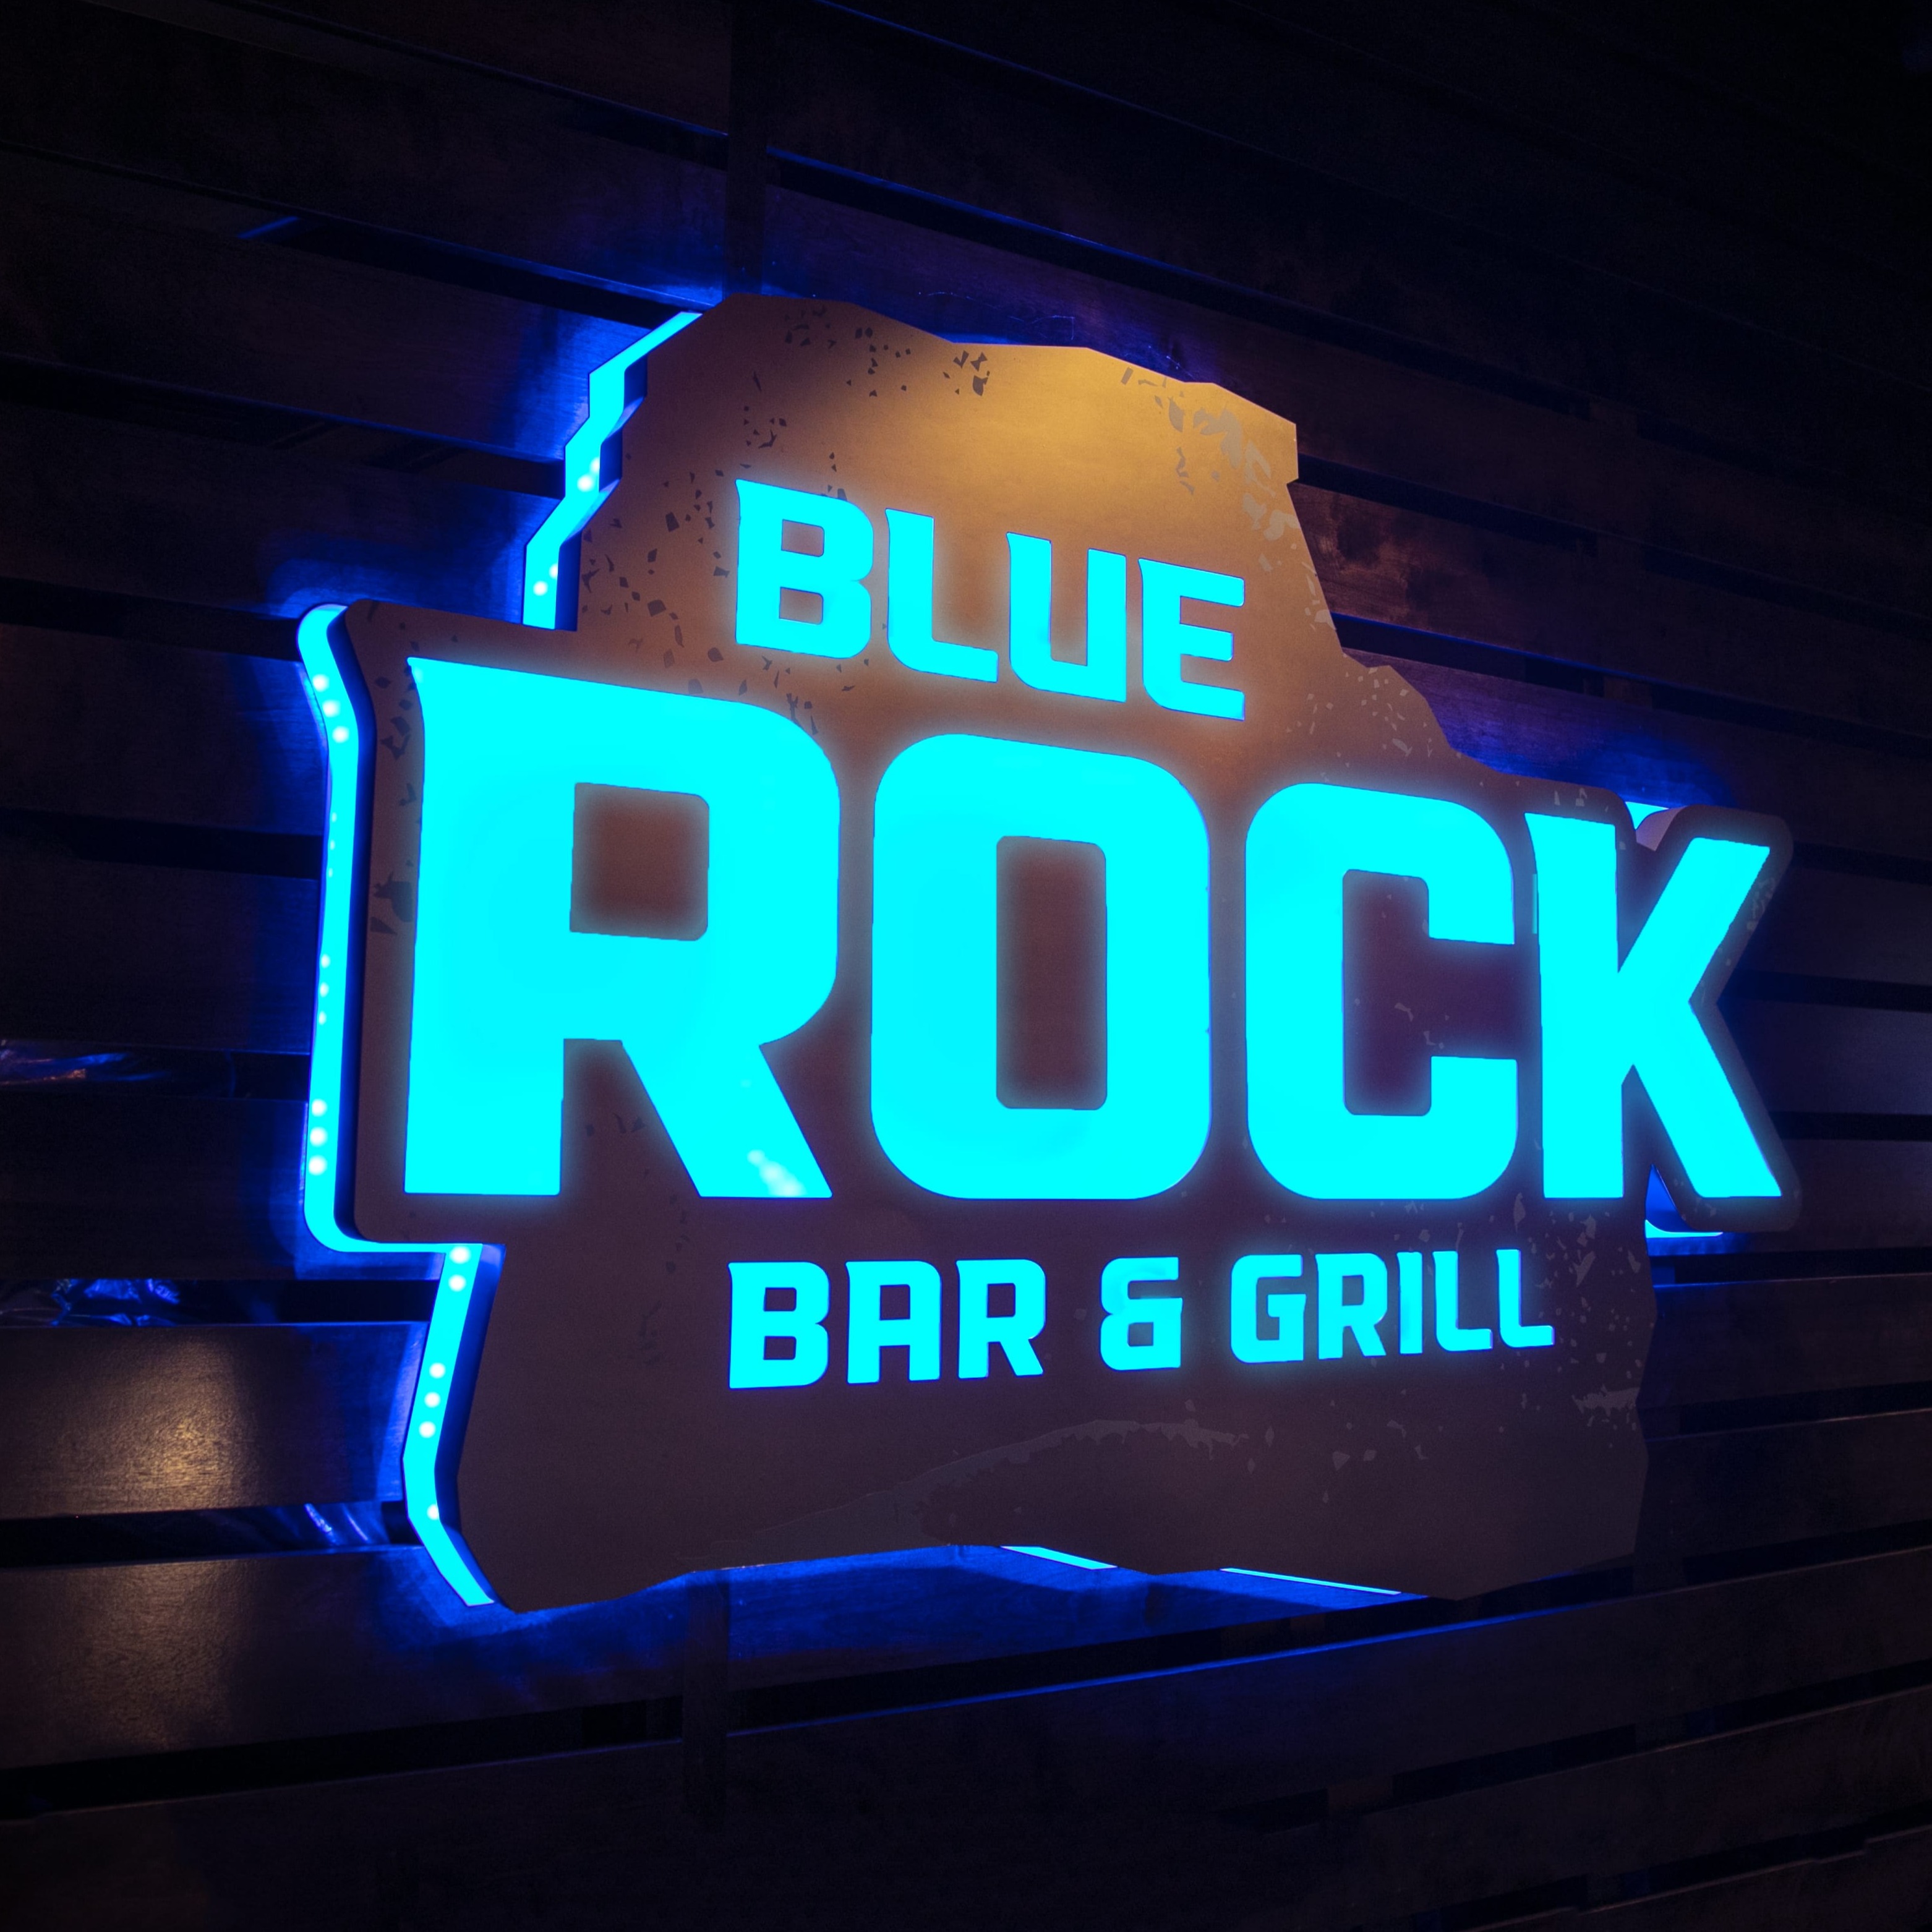 Blue Rock Bar & Grill